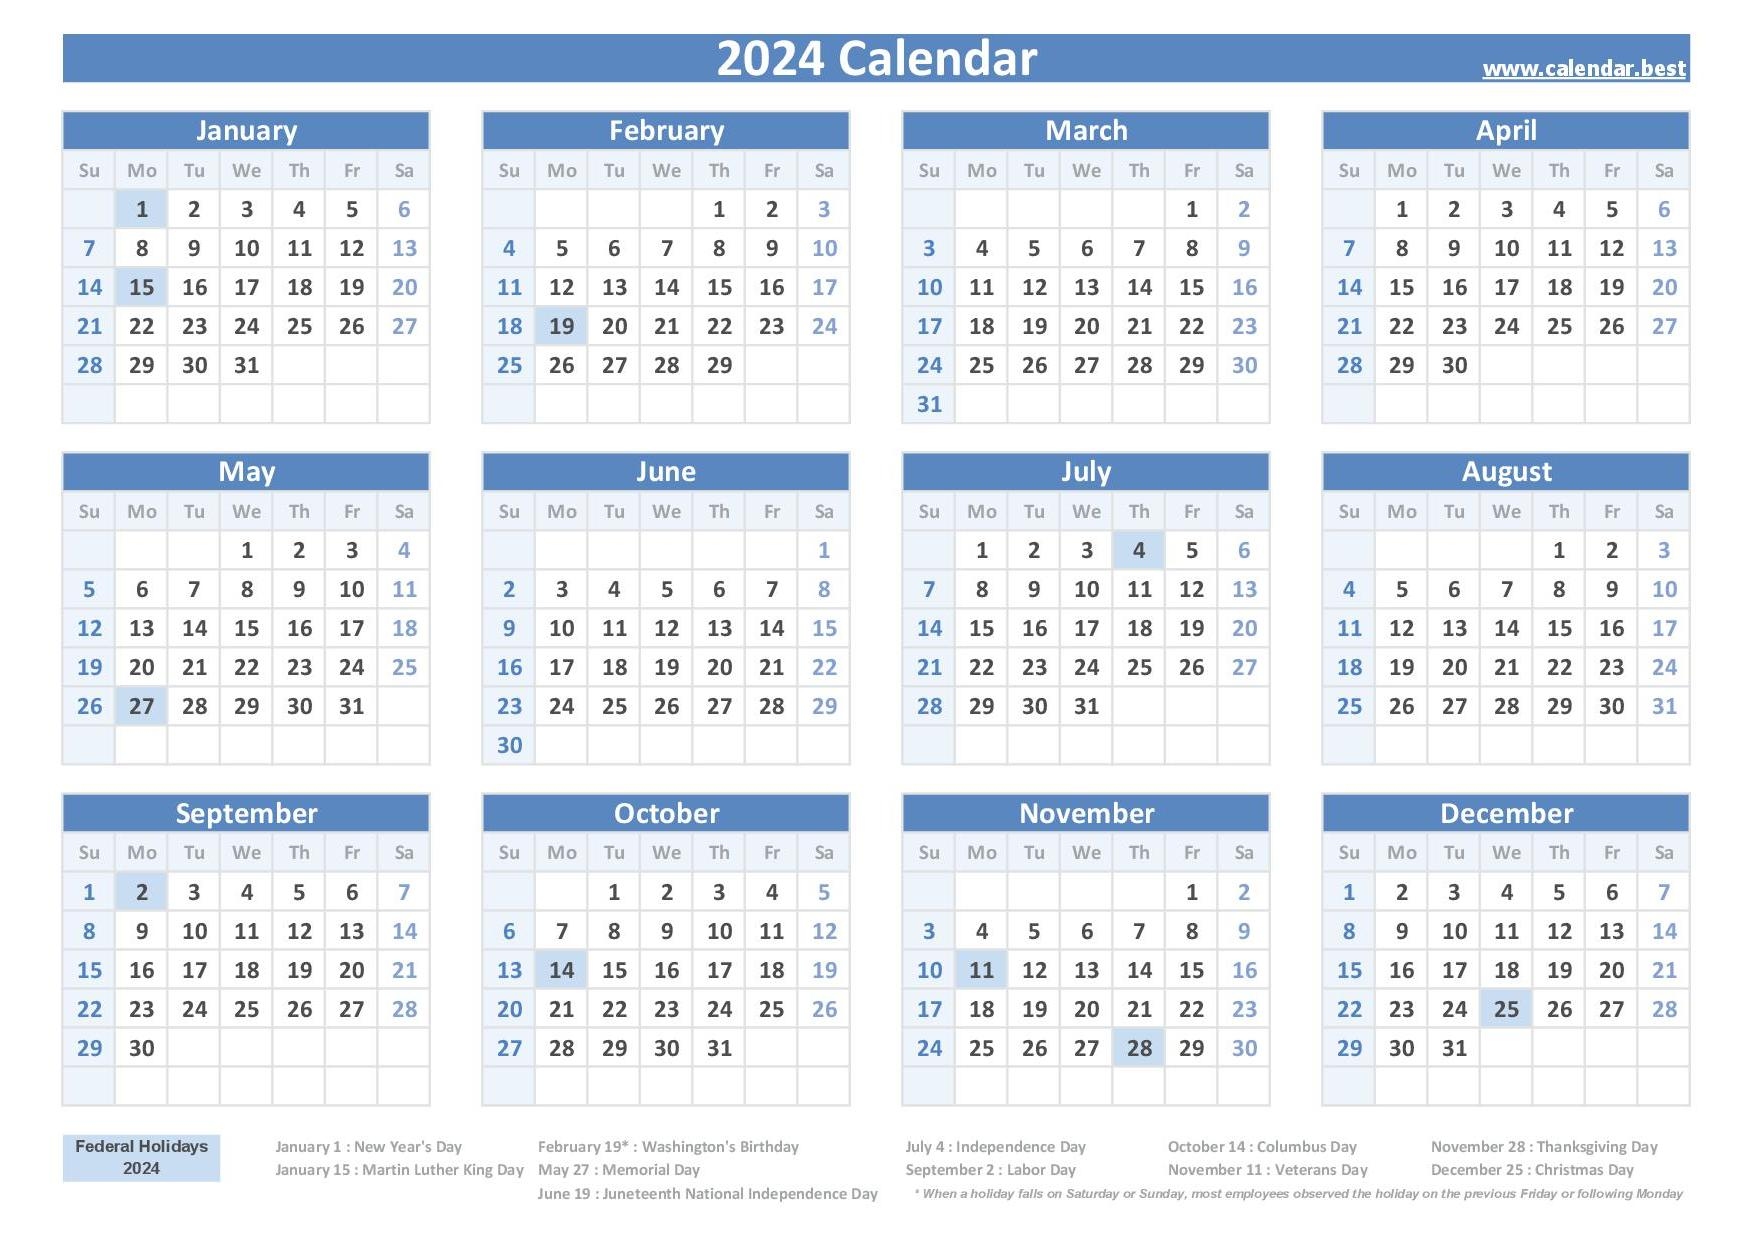 2024 Us Federal Holiday Calendar Printable Bill Marjie - Free Printable 2024 Calendar With Holidays March